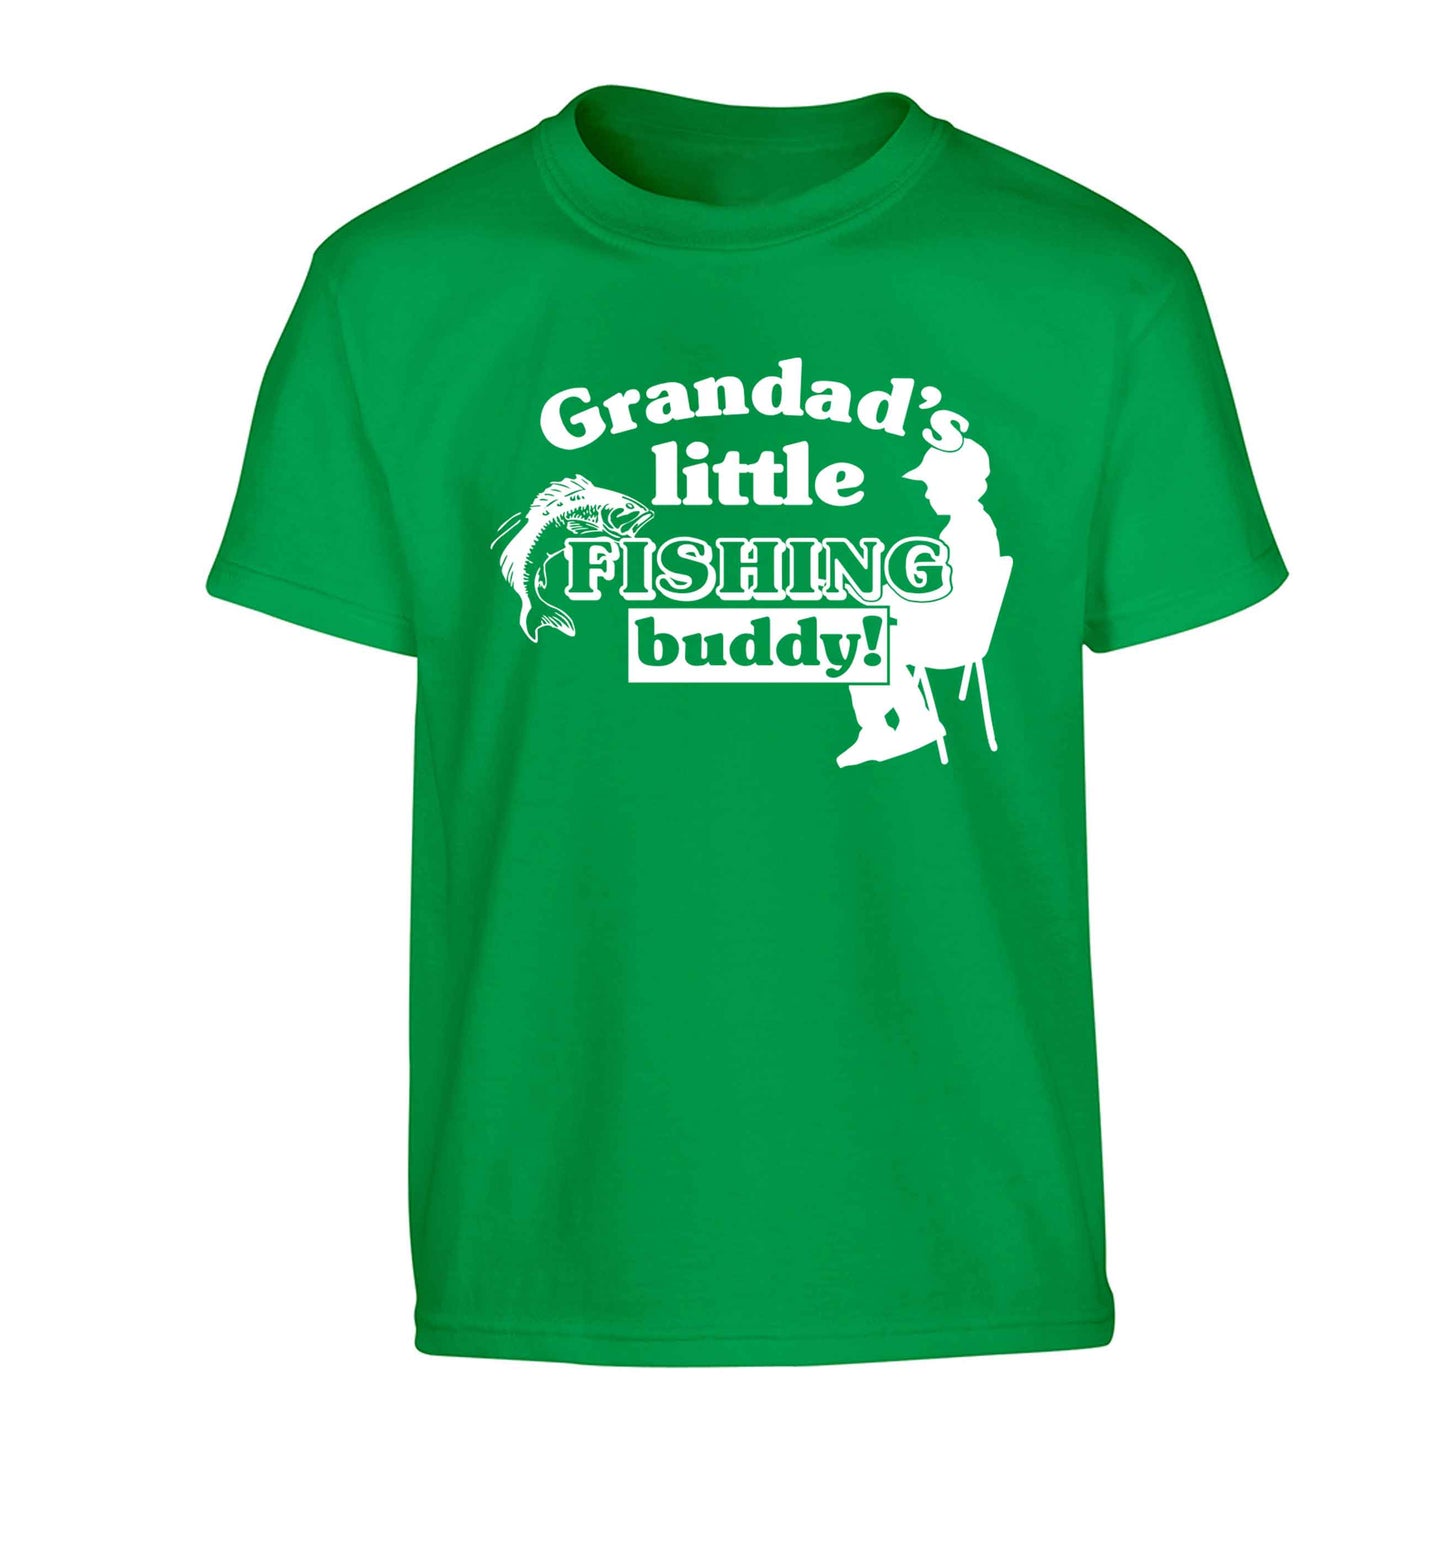 Grandad's little fishing buddy! Children's green Tshirt 12-13 Years